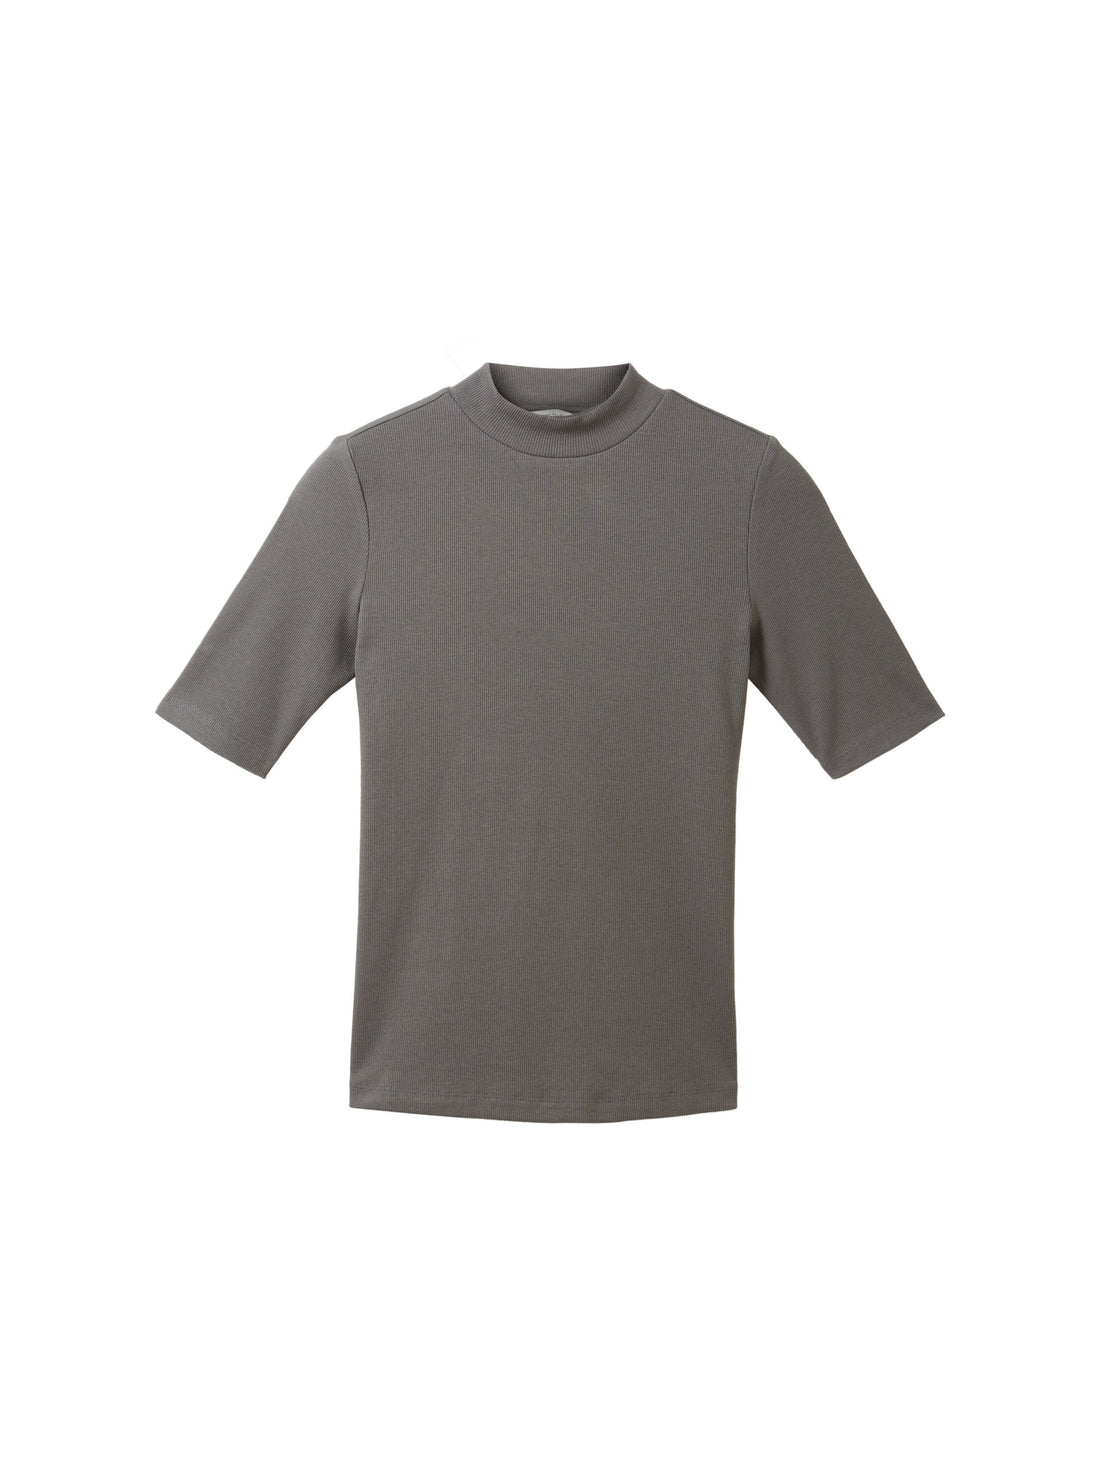 Short Sleeve Scuba Style T Shirt_1038064_32251_01